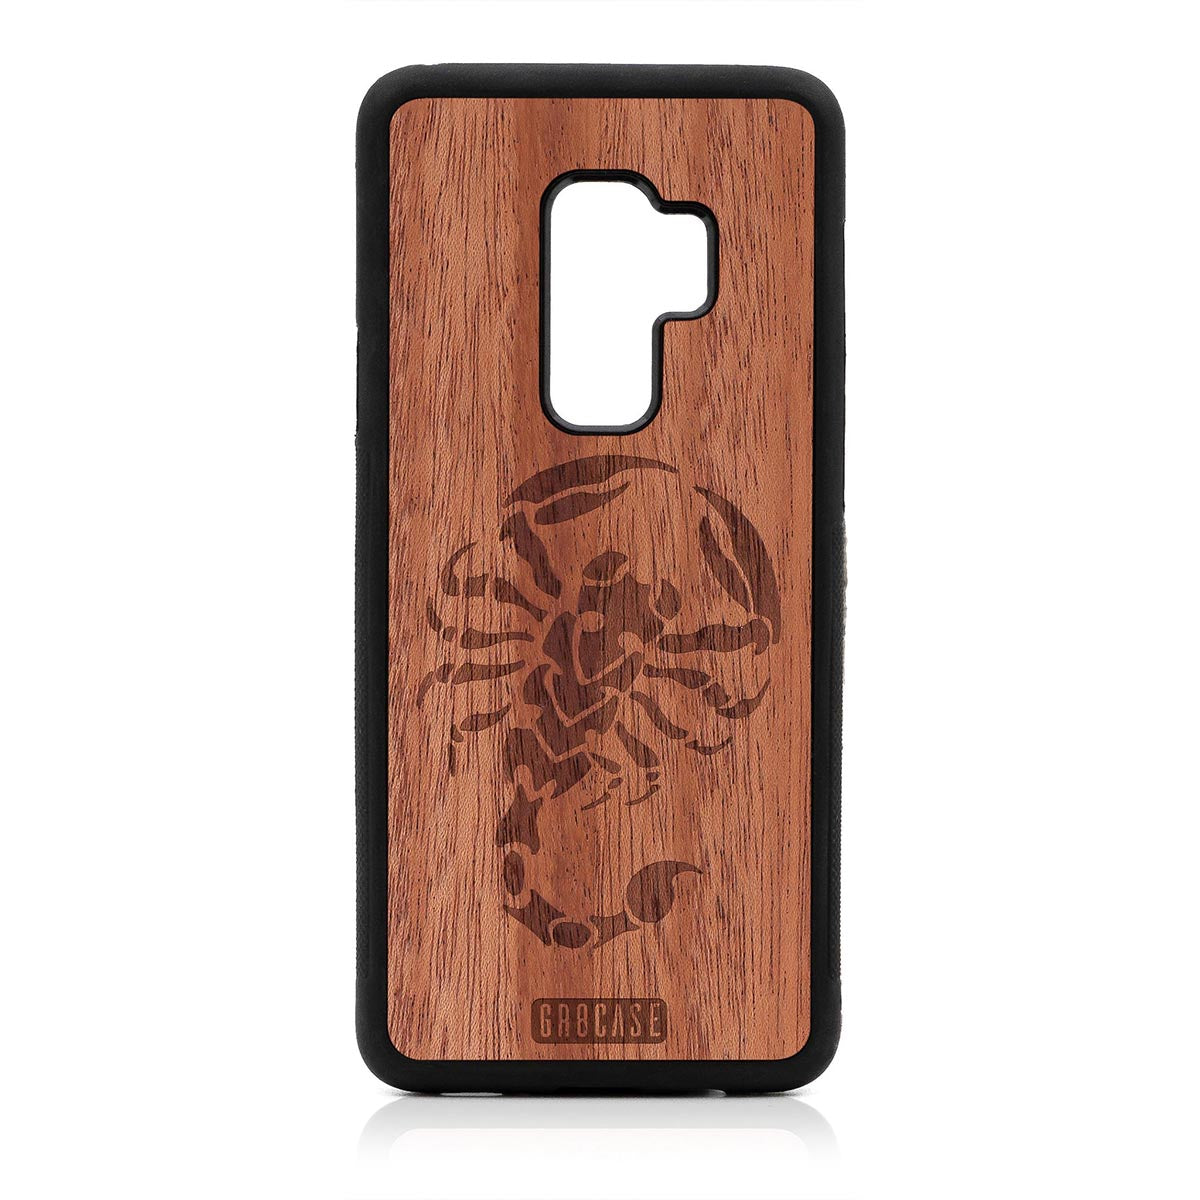 Scorpion Design Wood Case Samsung Galaxy S9 Plus by GR8CASE